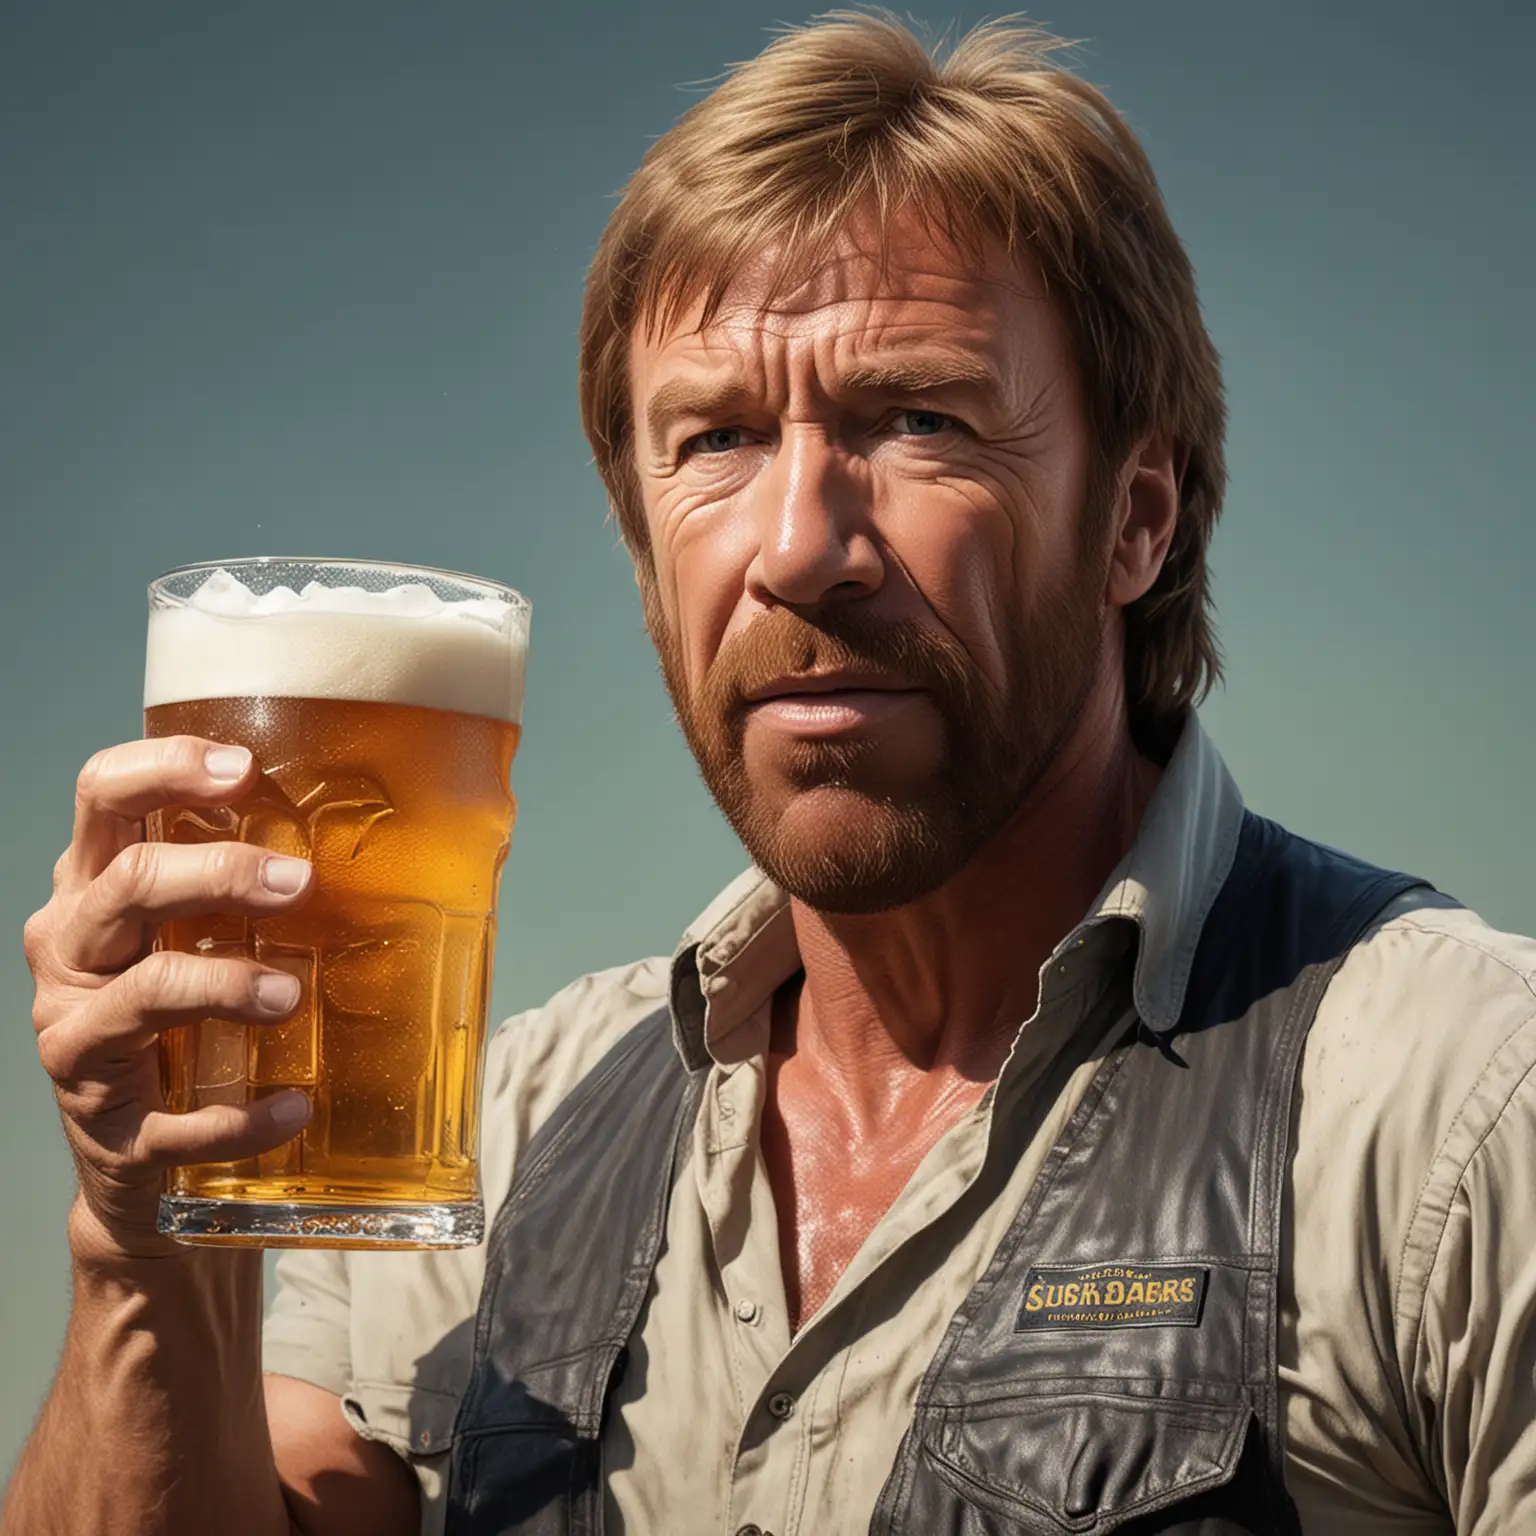 Chuck Norris Enjoying a Refreshing Draft Beer on a Hot Summer Day